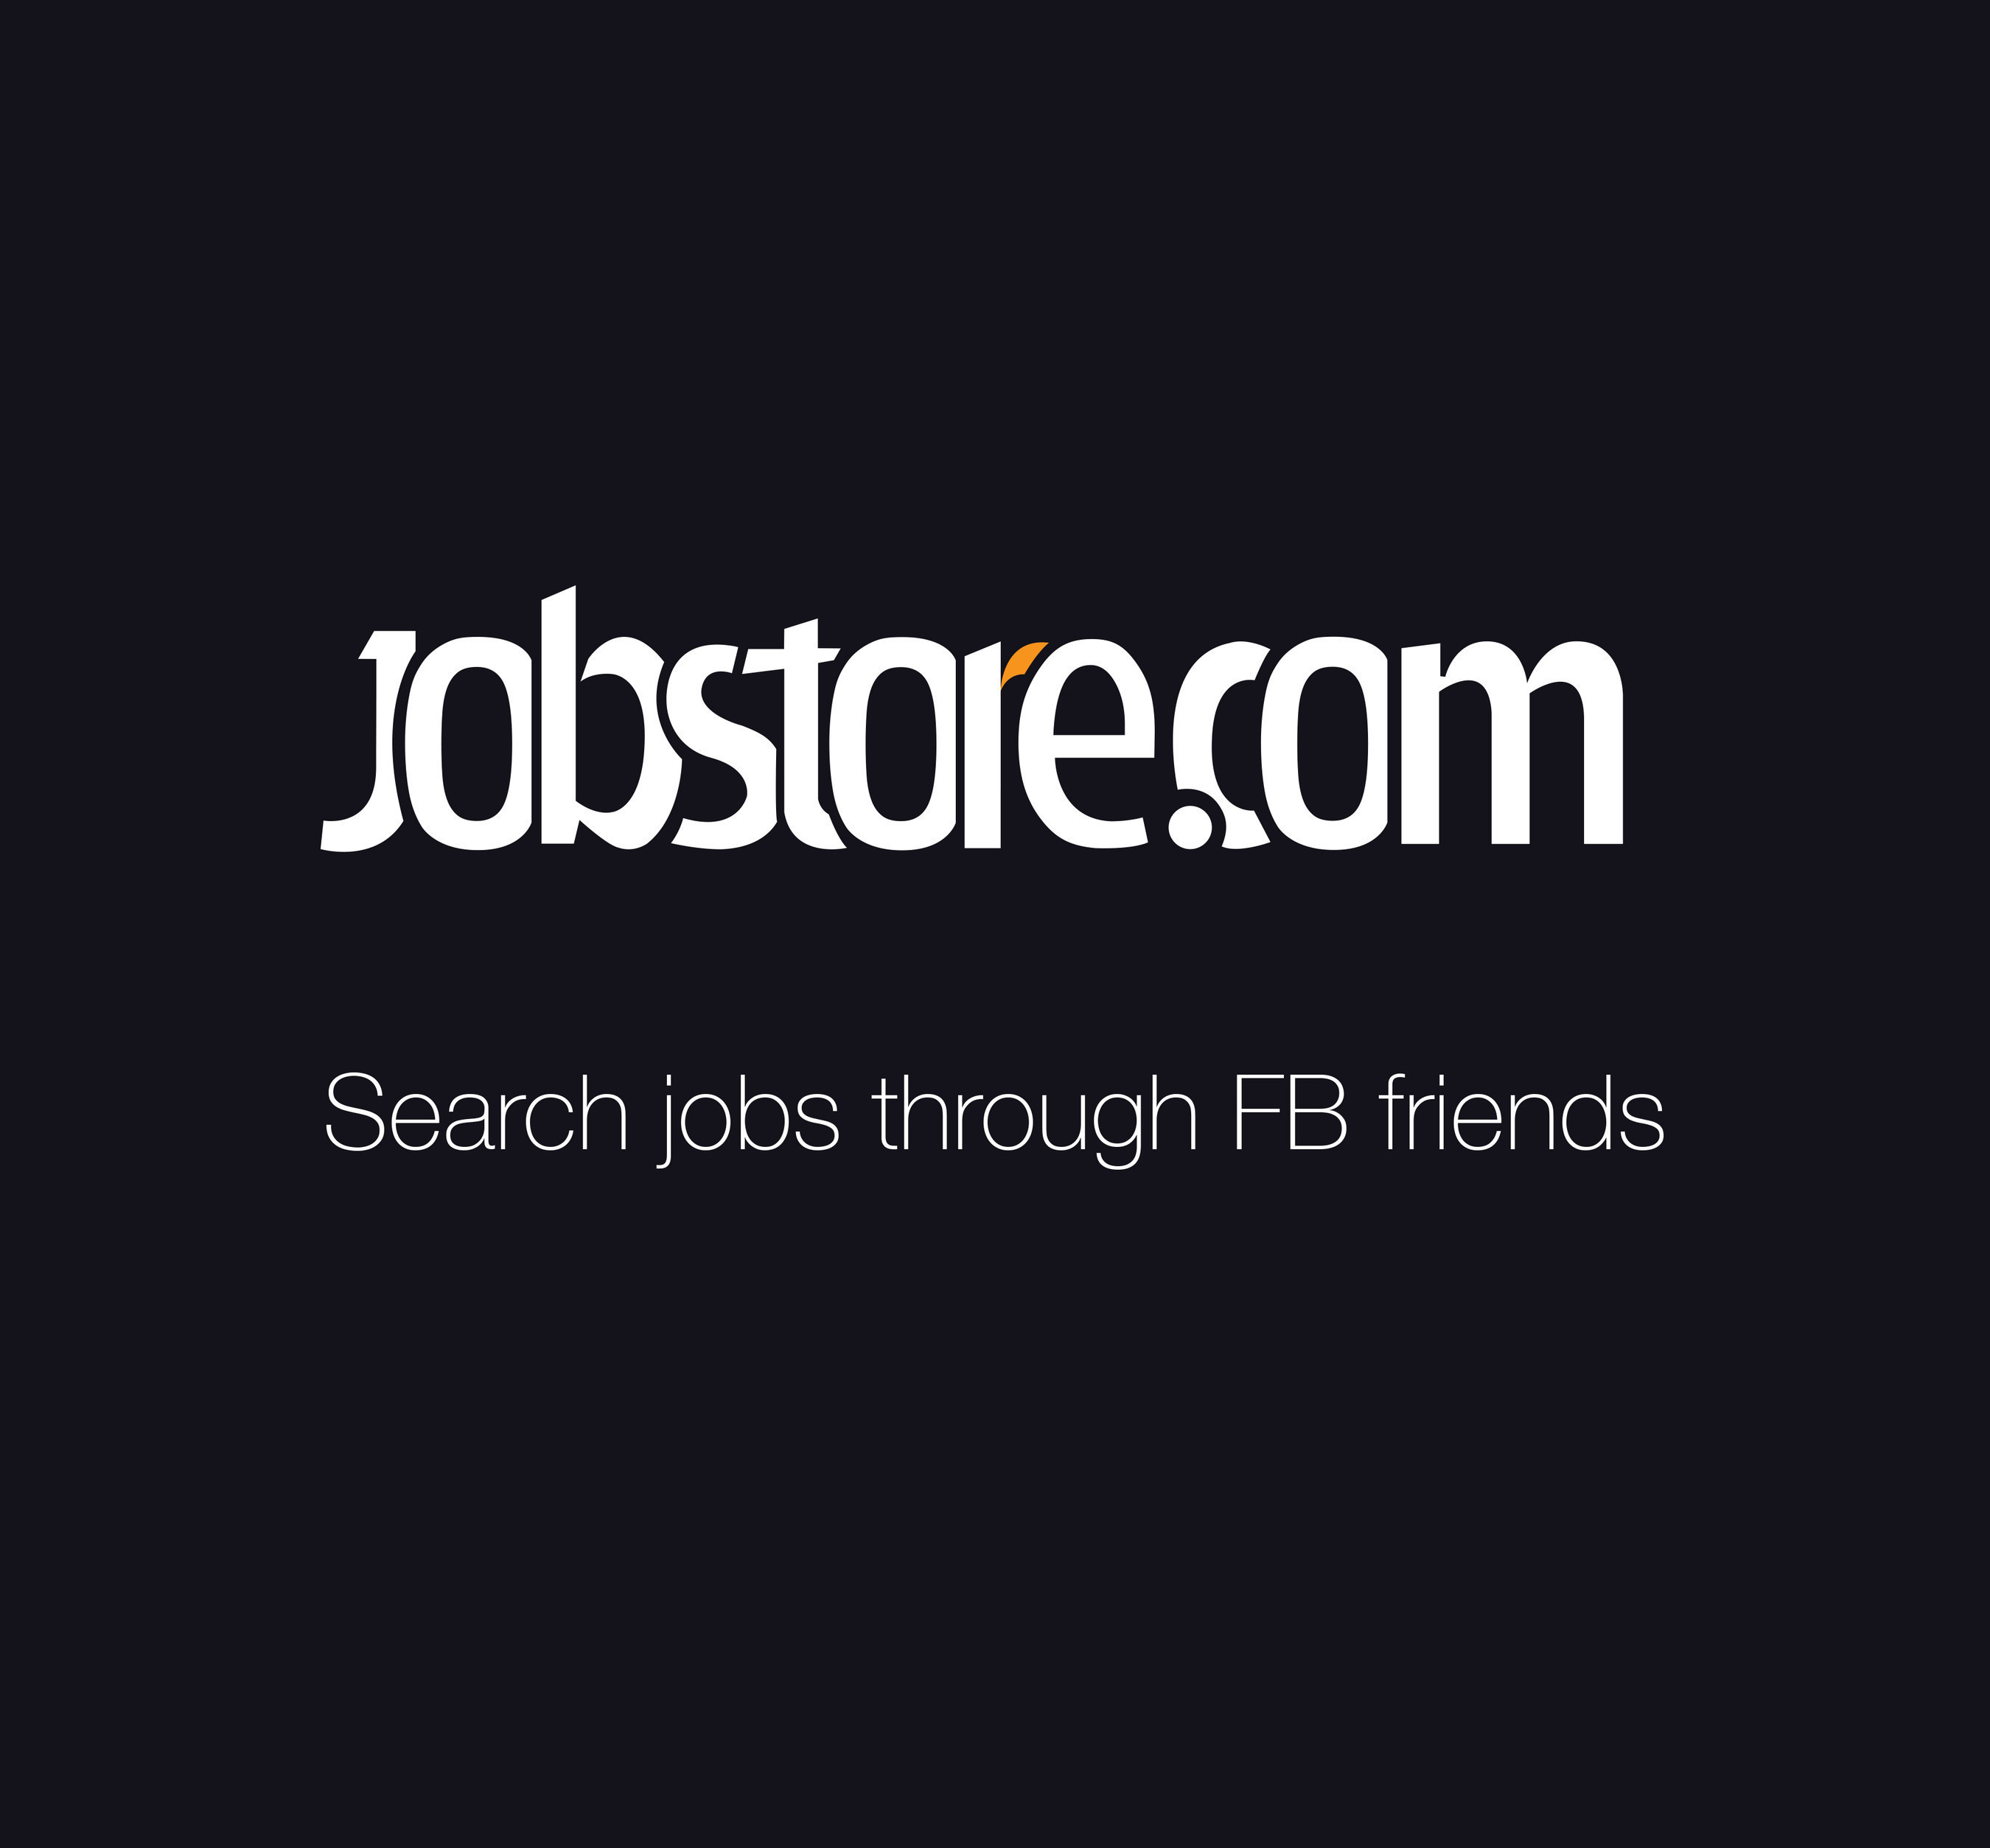 Jobstore.com - Search jobs through FB friends